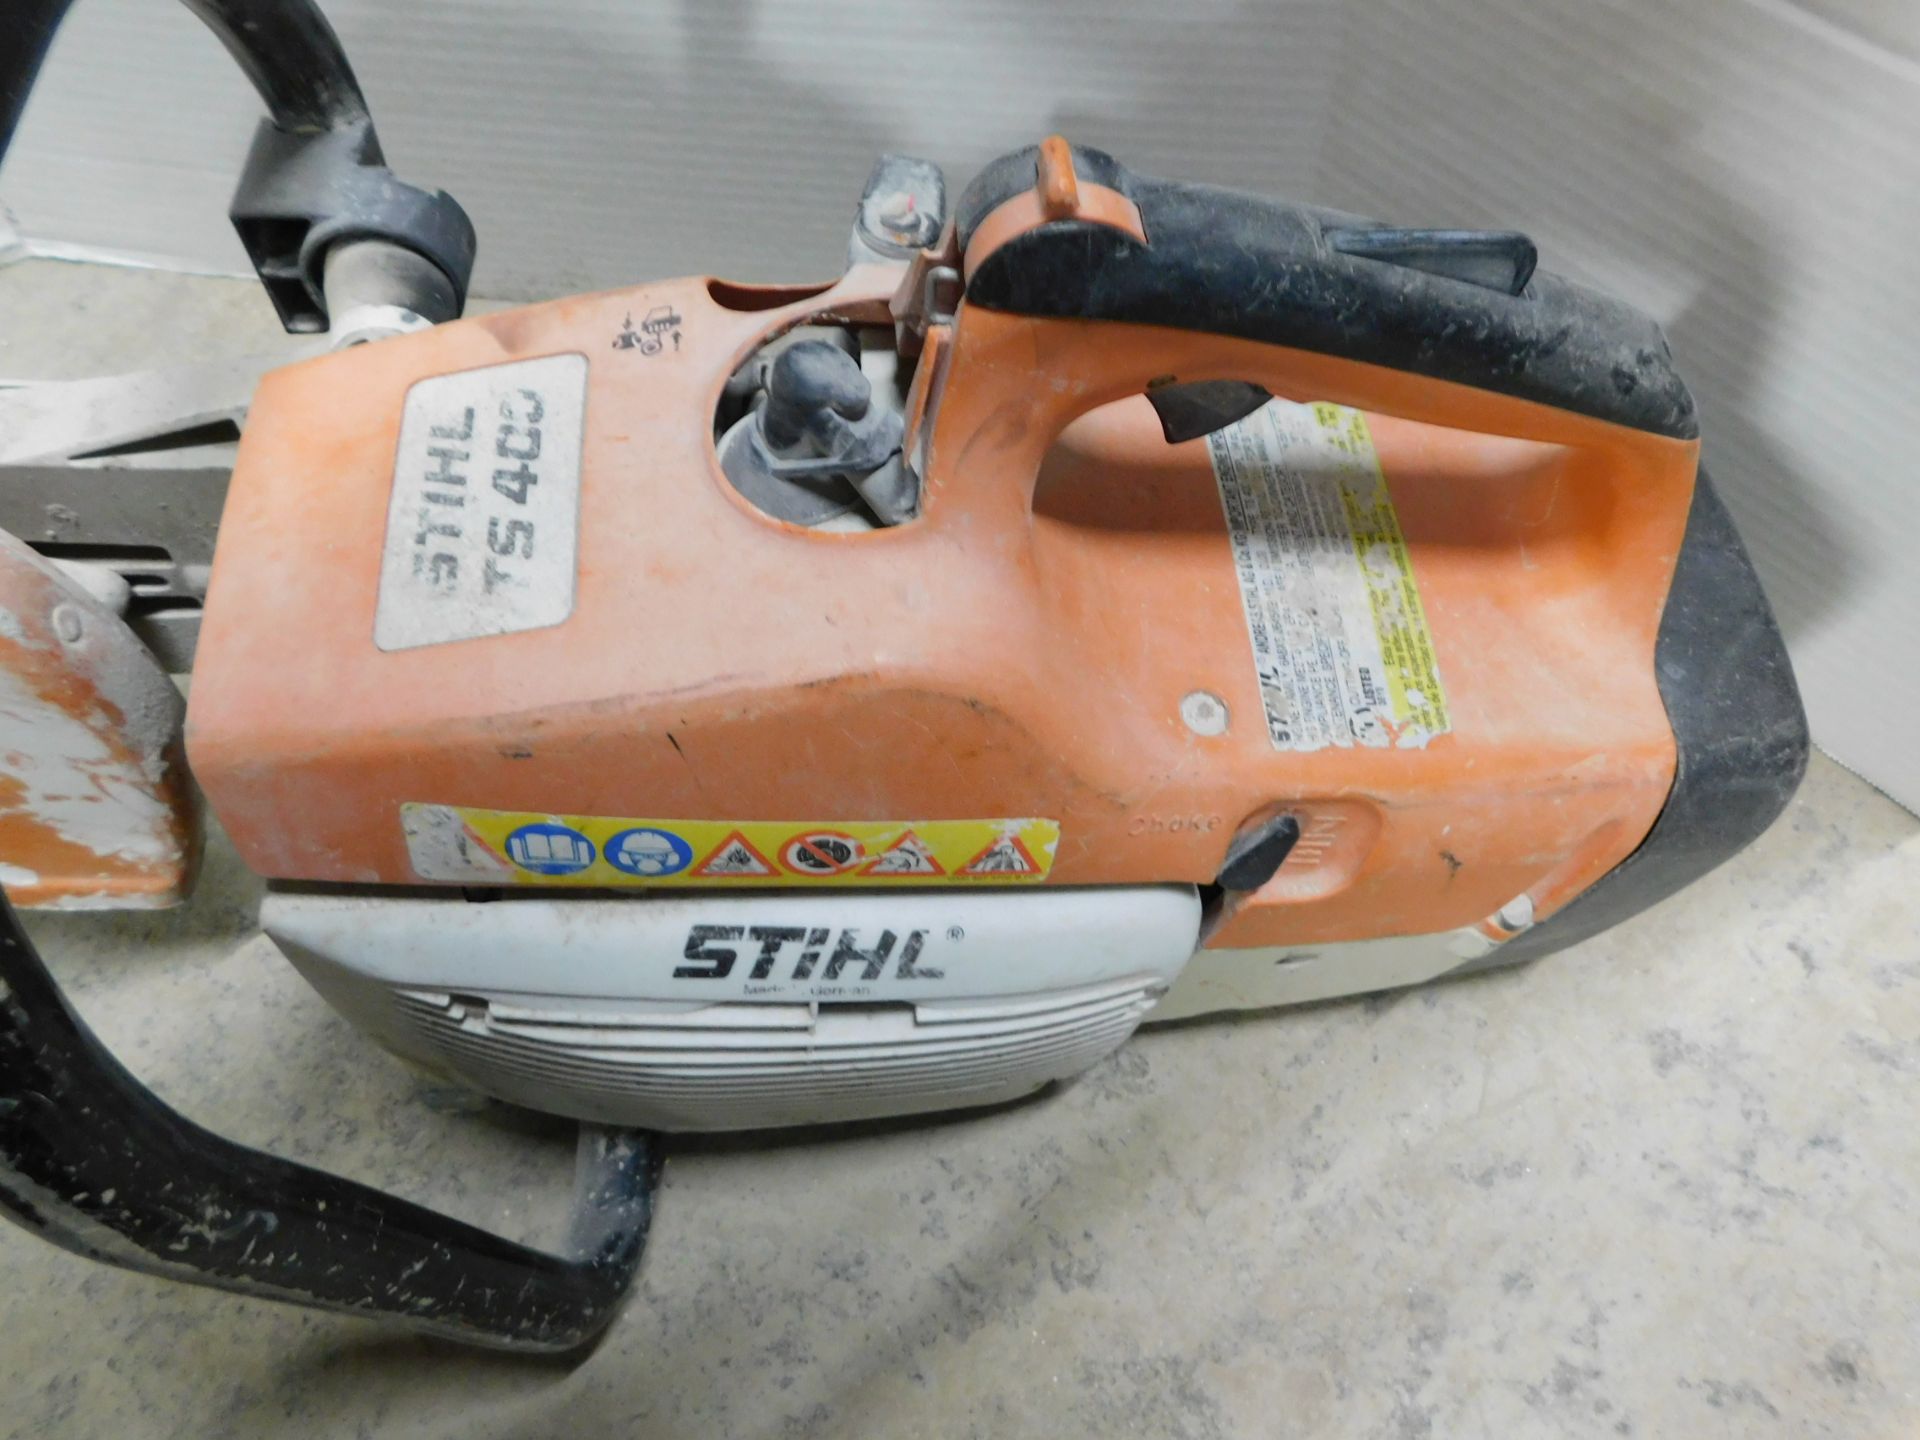 Stihl TS 400 Gas-Powered Cut-Off Saw - Image 6 of 7